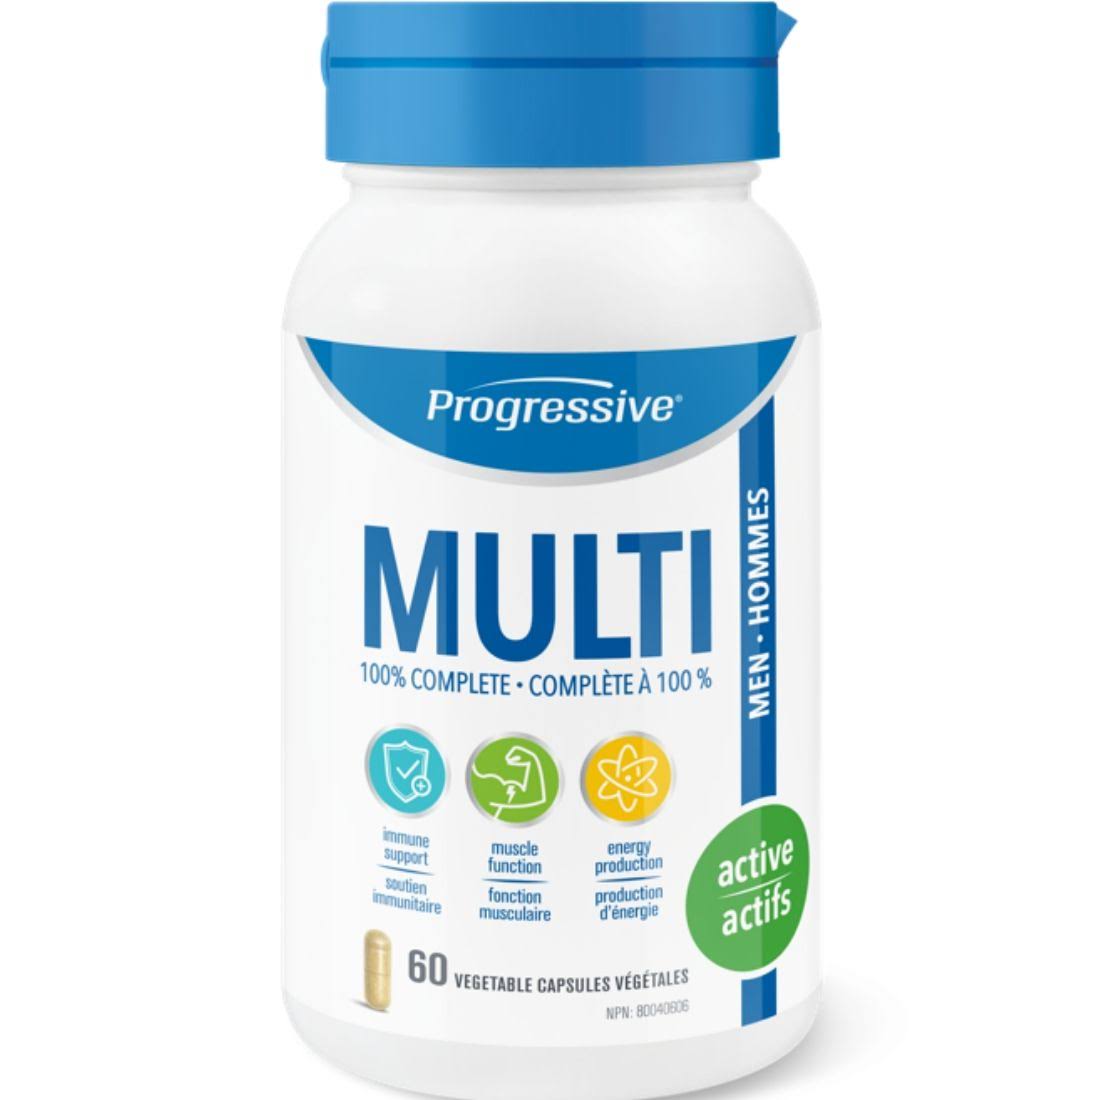 Progressive Men's Vitamin and Mineral Supplement - 120ct